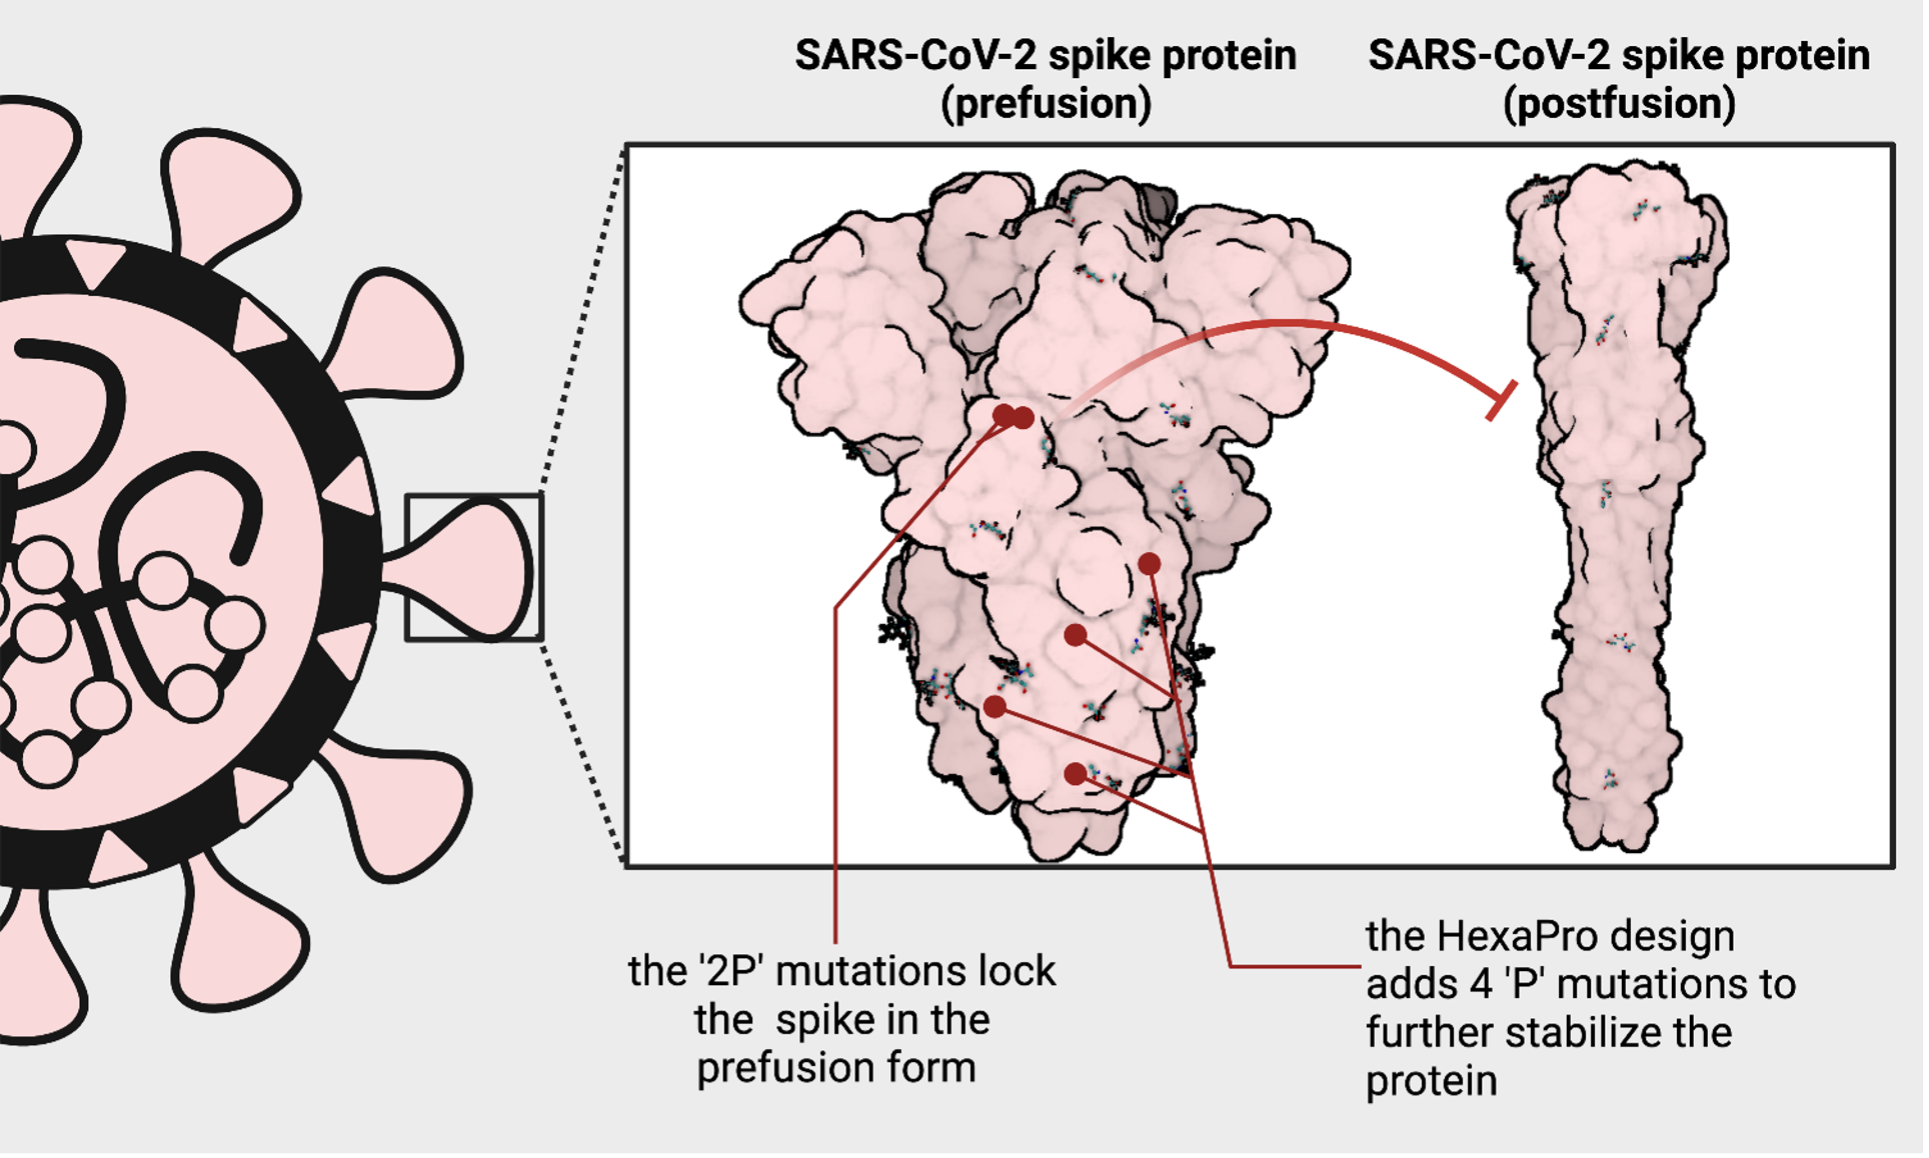 SARS-CoV-2 Spike Protein fusion